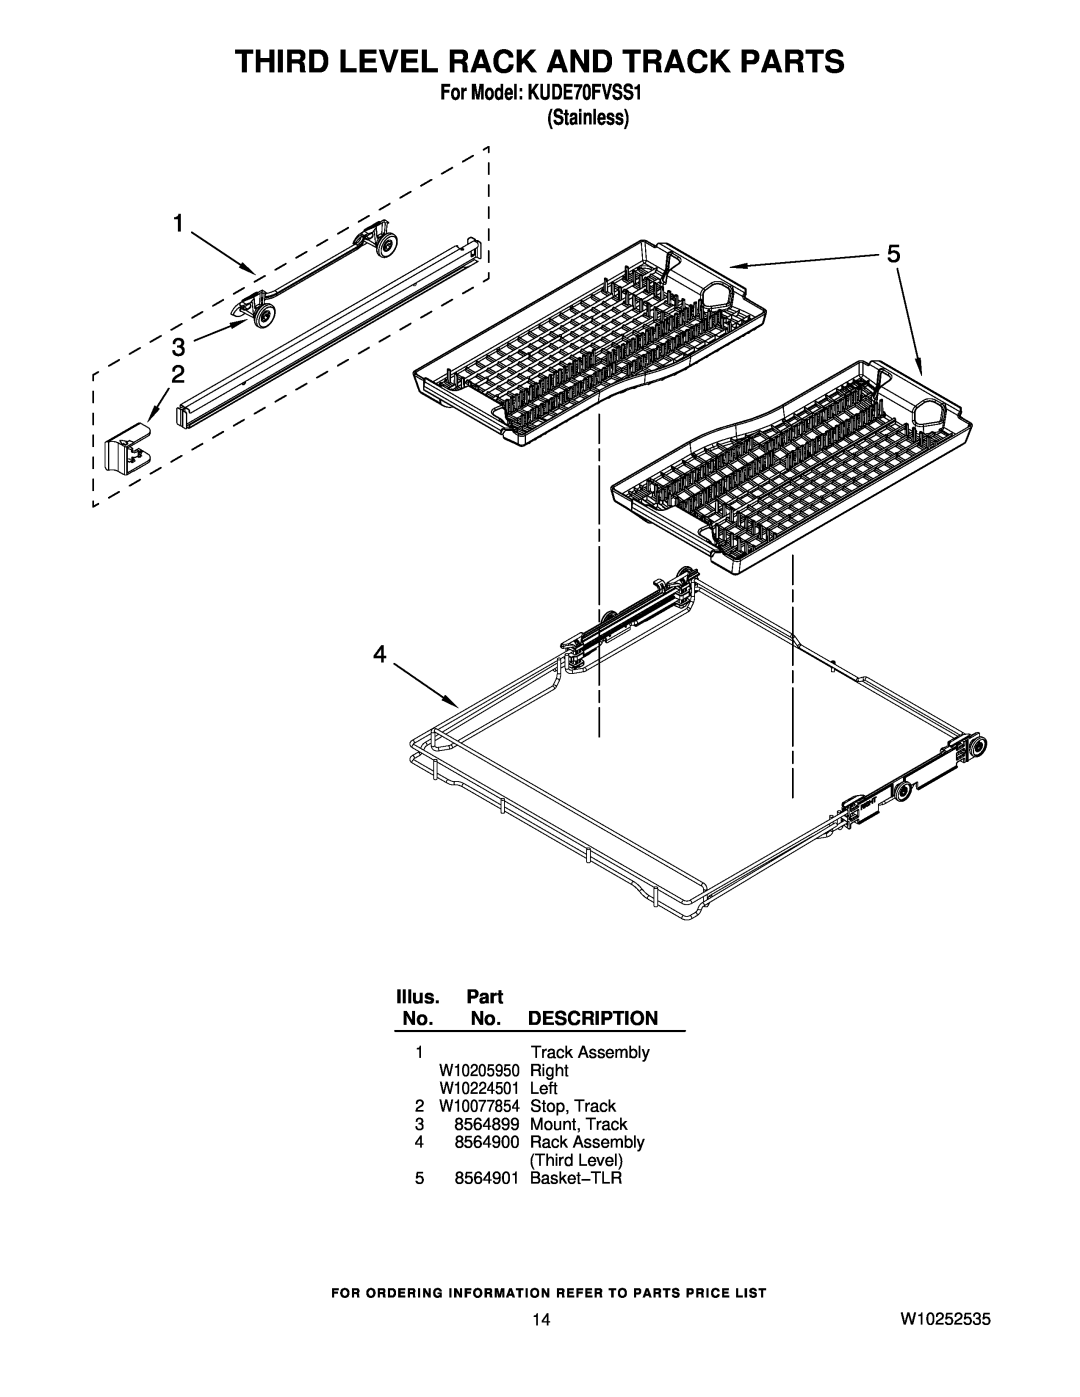 KitchenAid manual Third Level Rack And Track Parts, Illus. Part No. No. DESCRIPTION, For Model KUDE70FVSS1 Stainless 